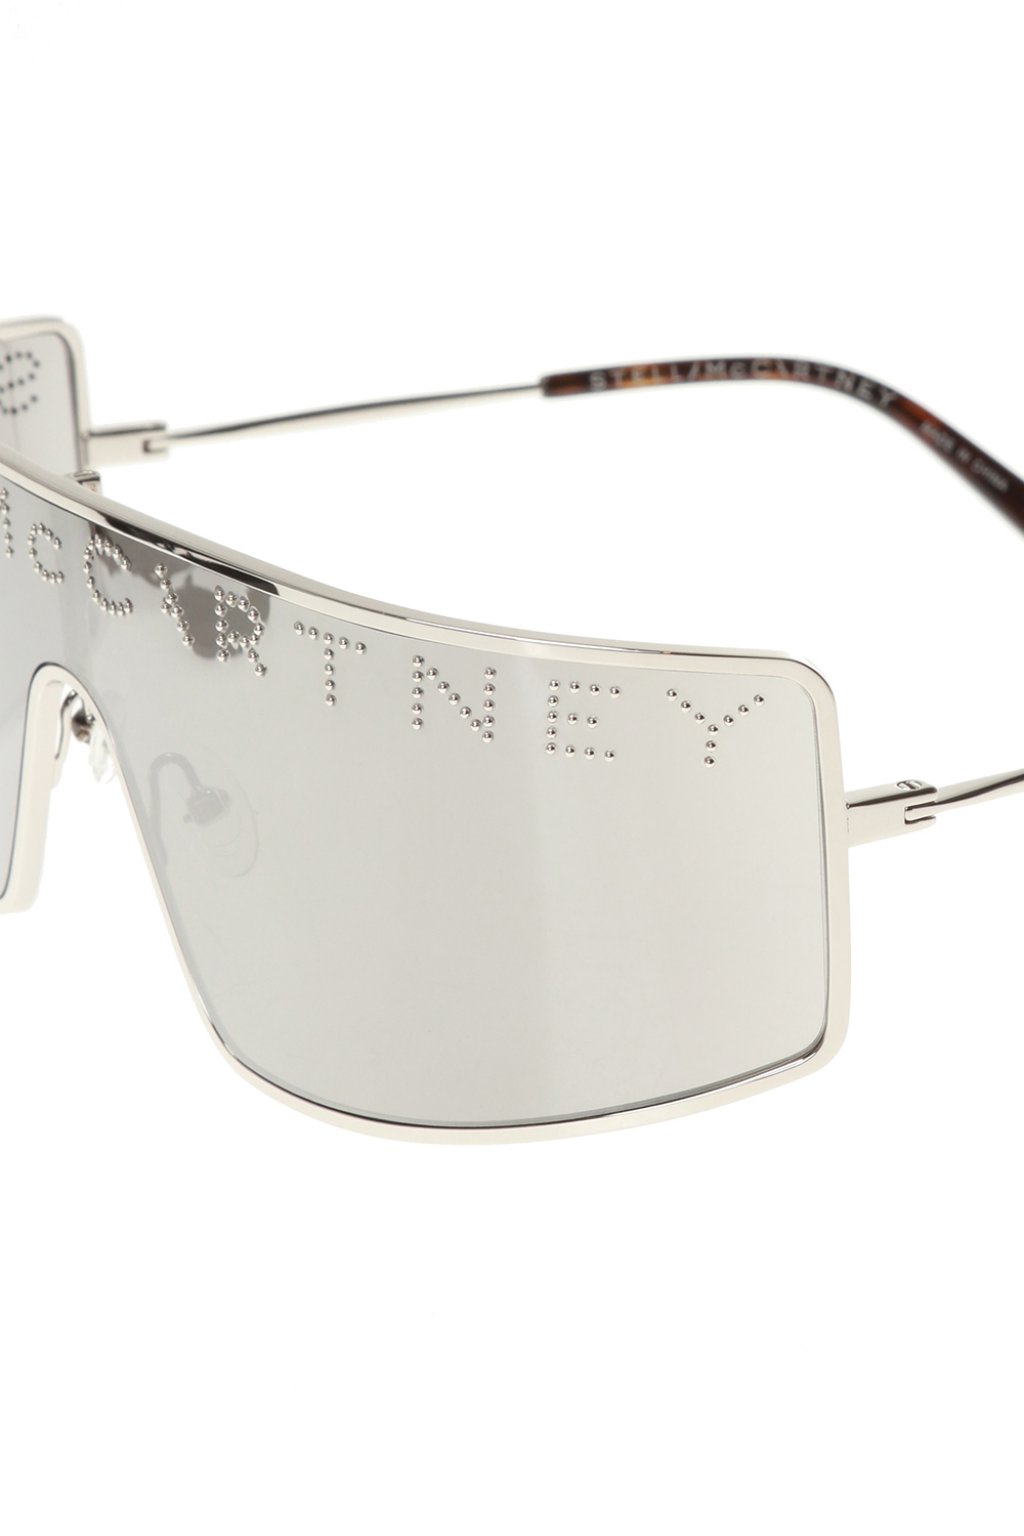 chanel cat eye sunglasses 6054